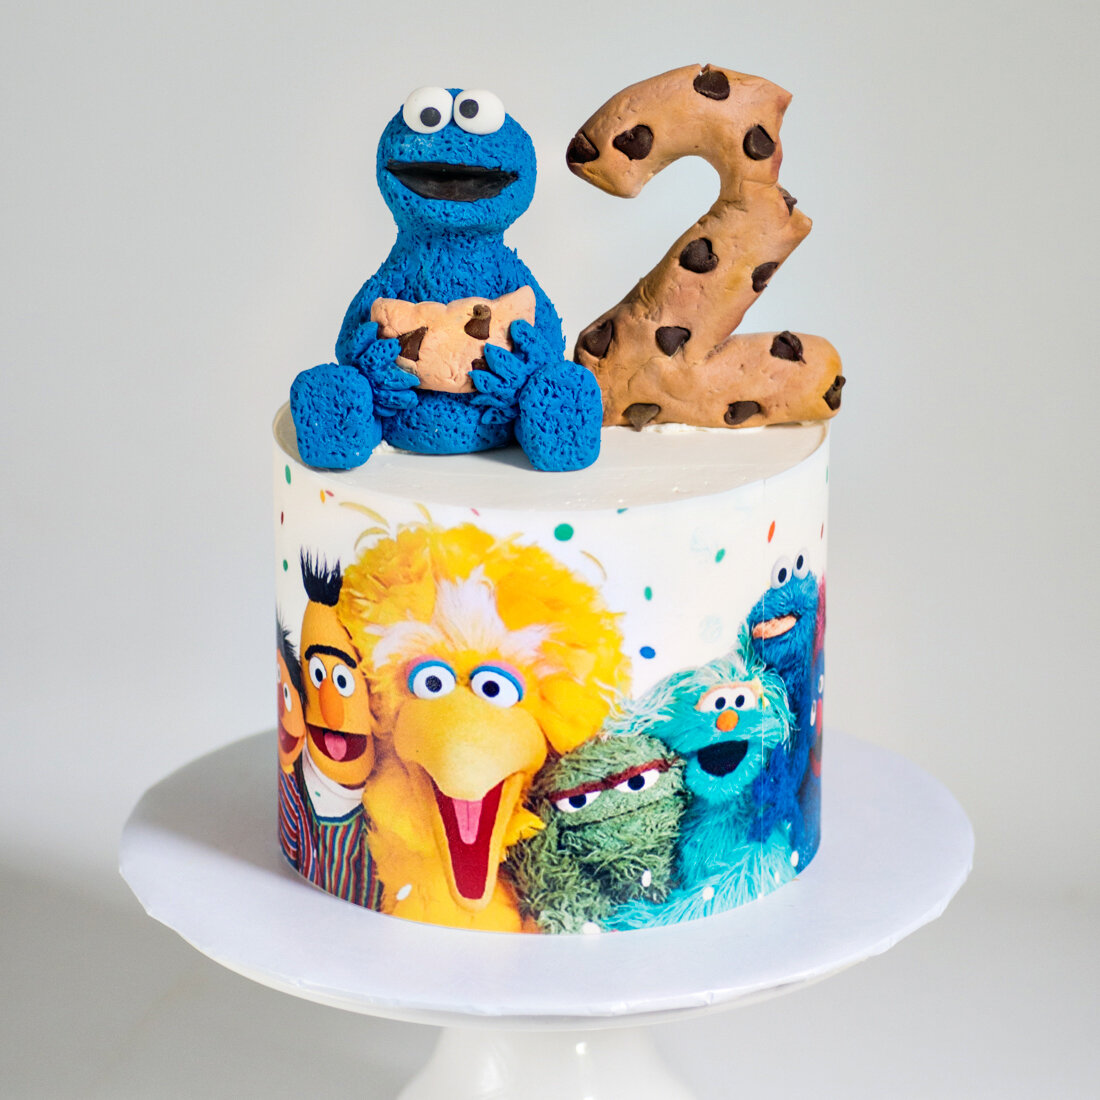 Children's birthday cakes - ΠΑΠΑΣΠΥΡΟΥ-sgquangbinhtourist.com.vn